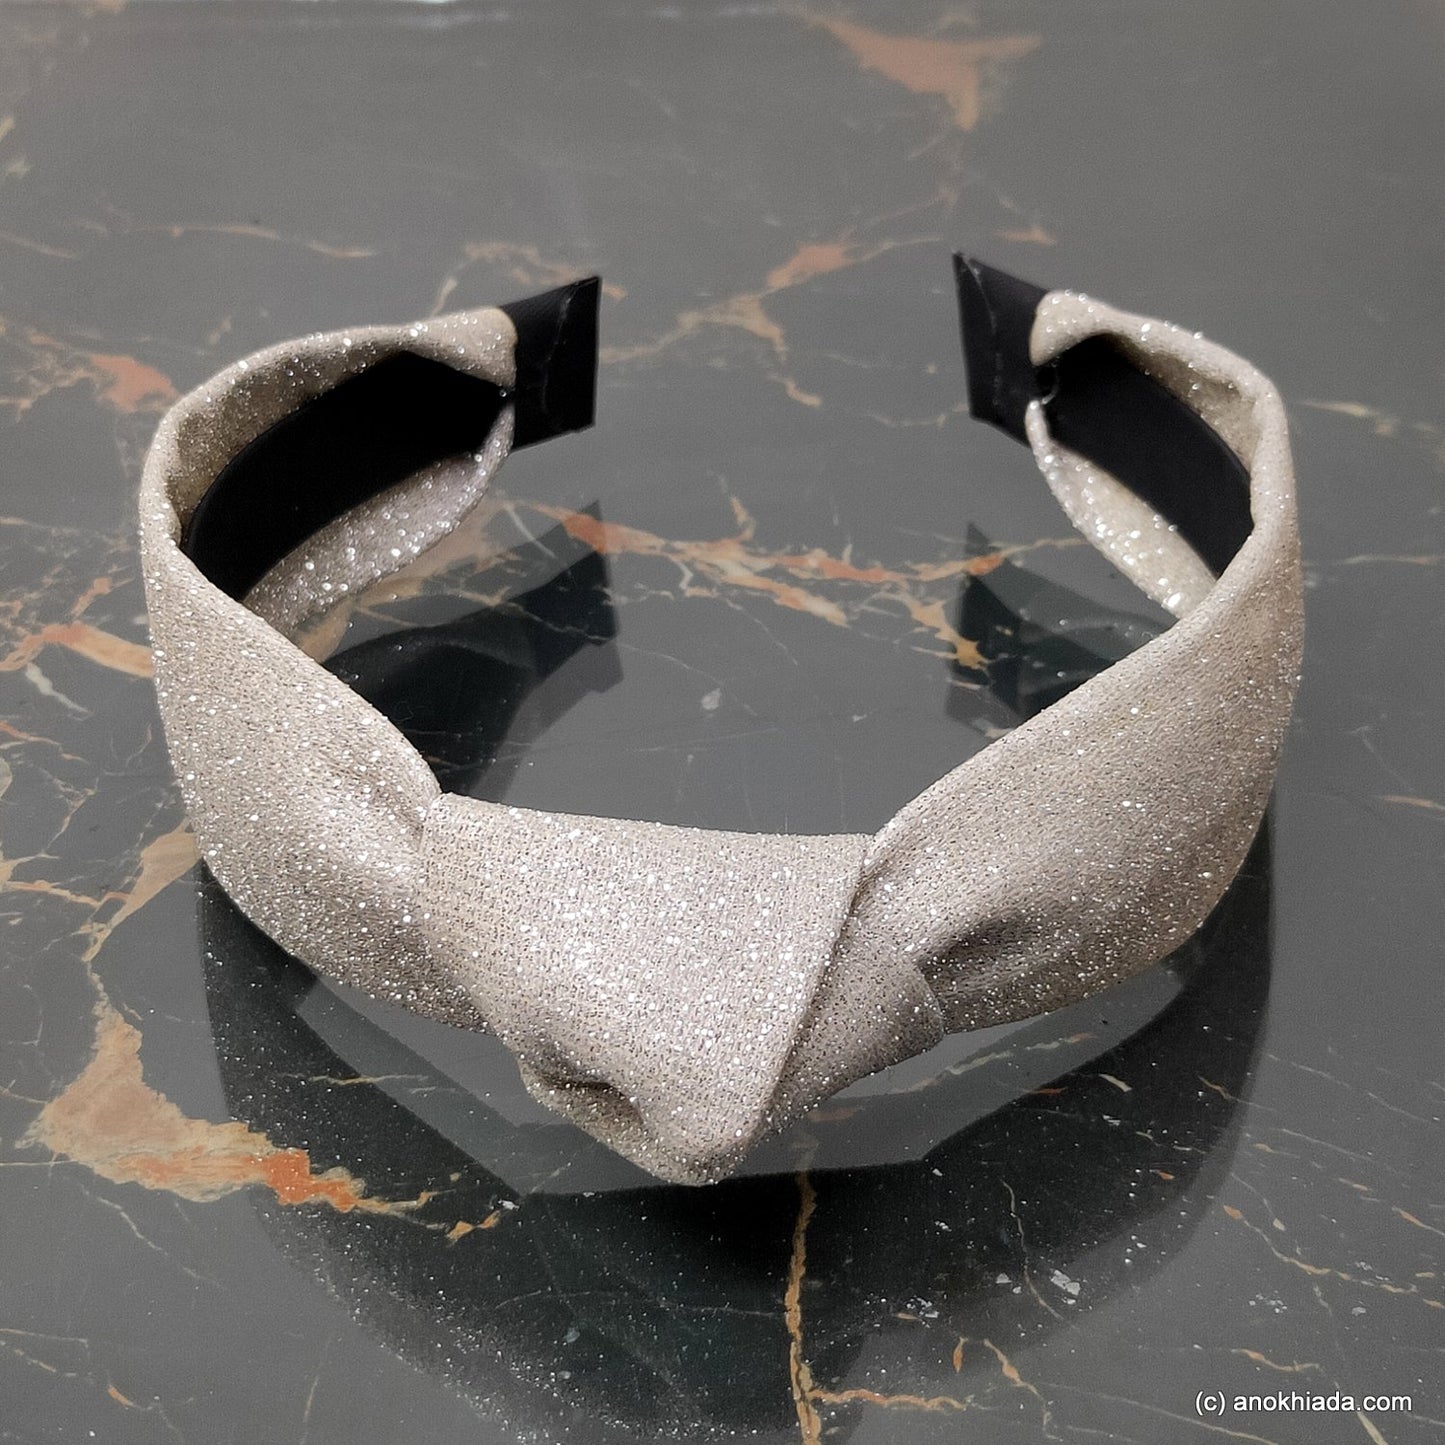 Anokhi Ada Handmade Silver Shiny and Glittery Fabric Knot Hairband/Headband for Girls and Women -14-28H